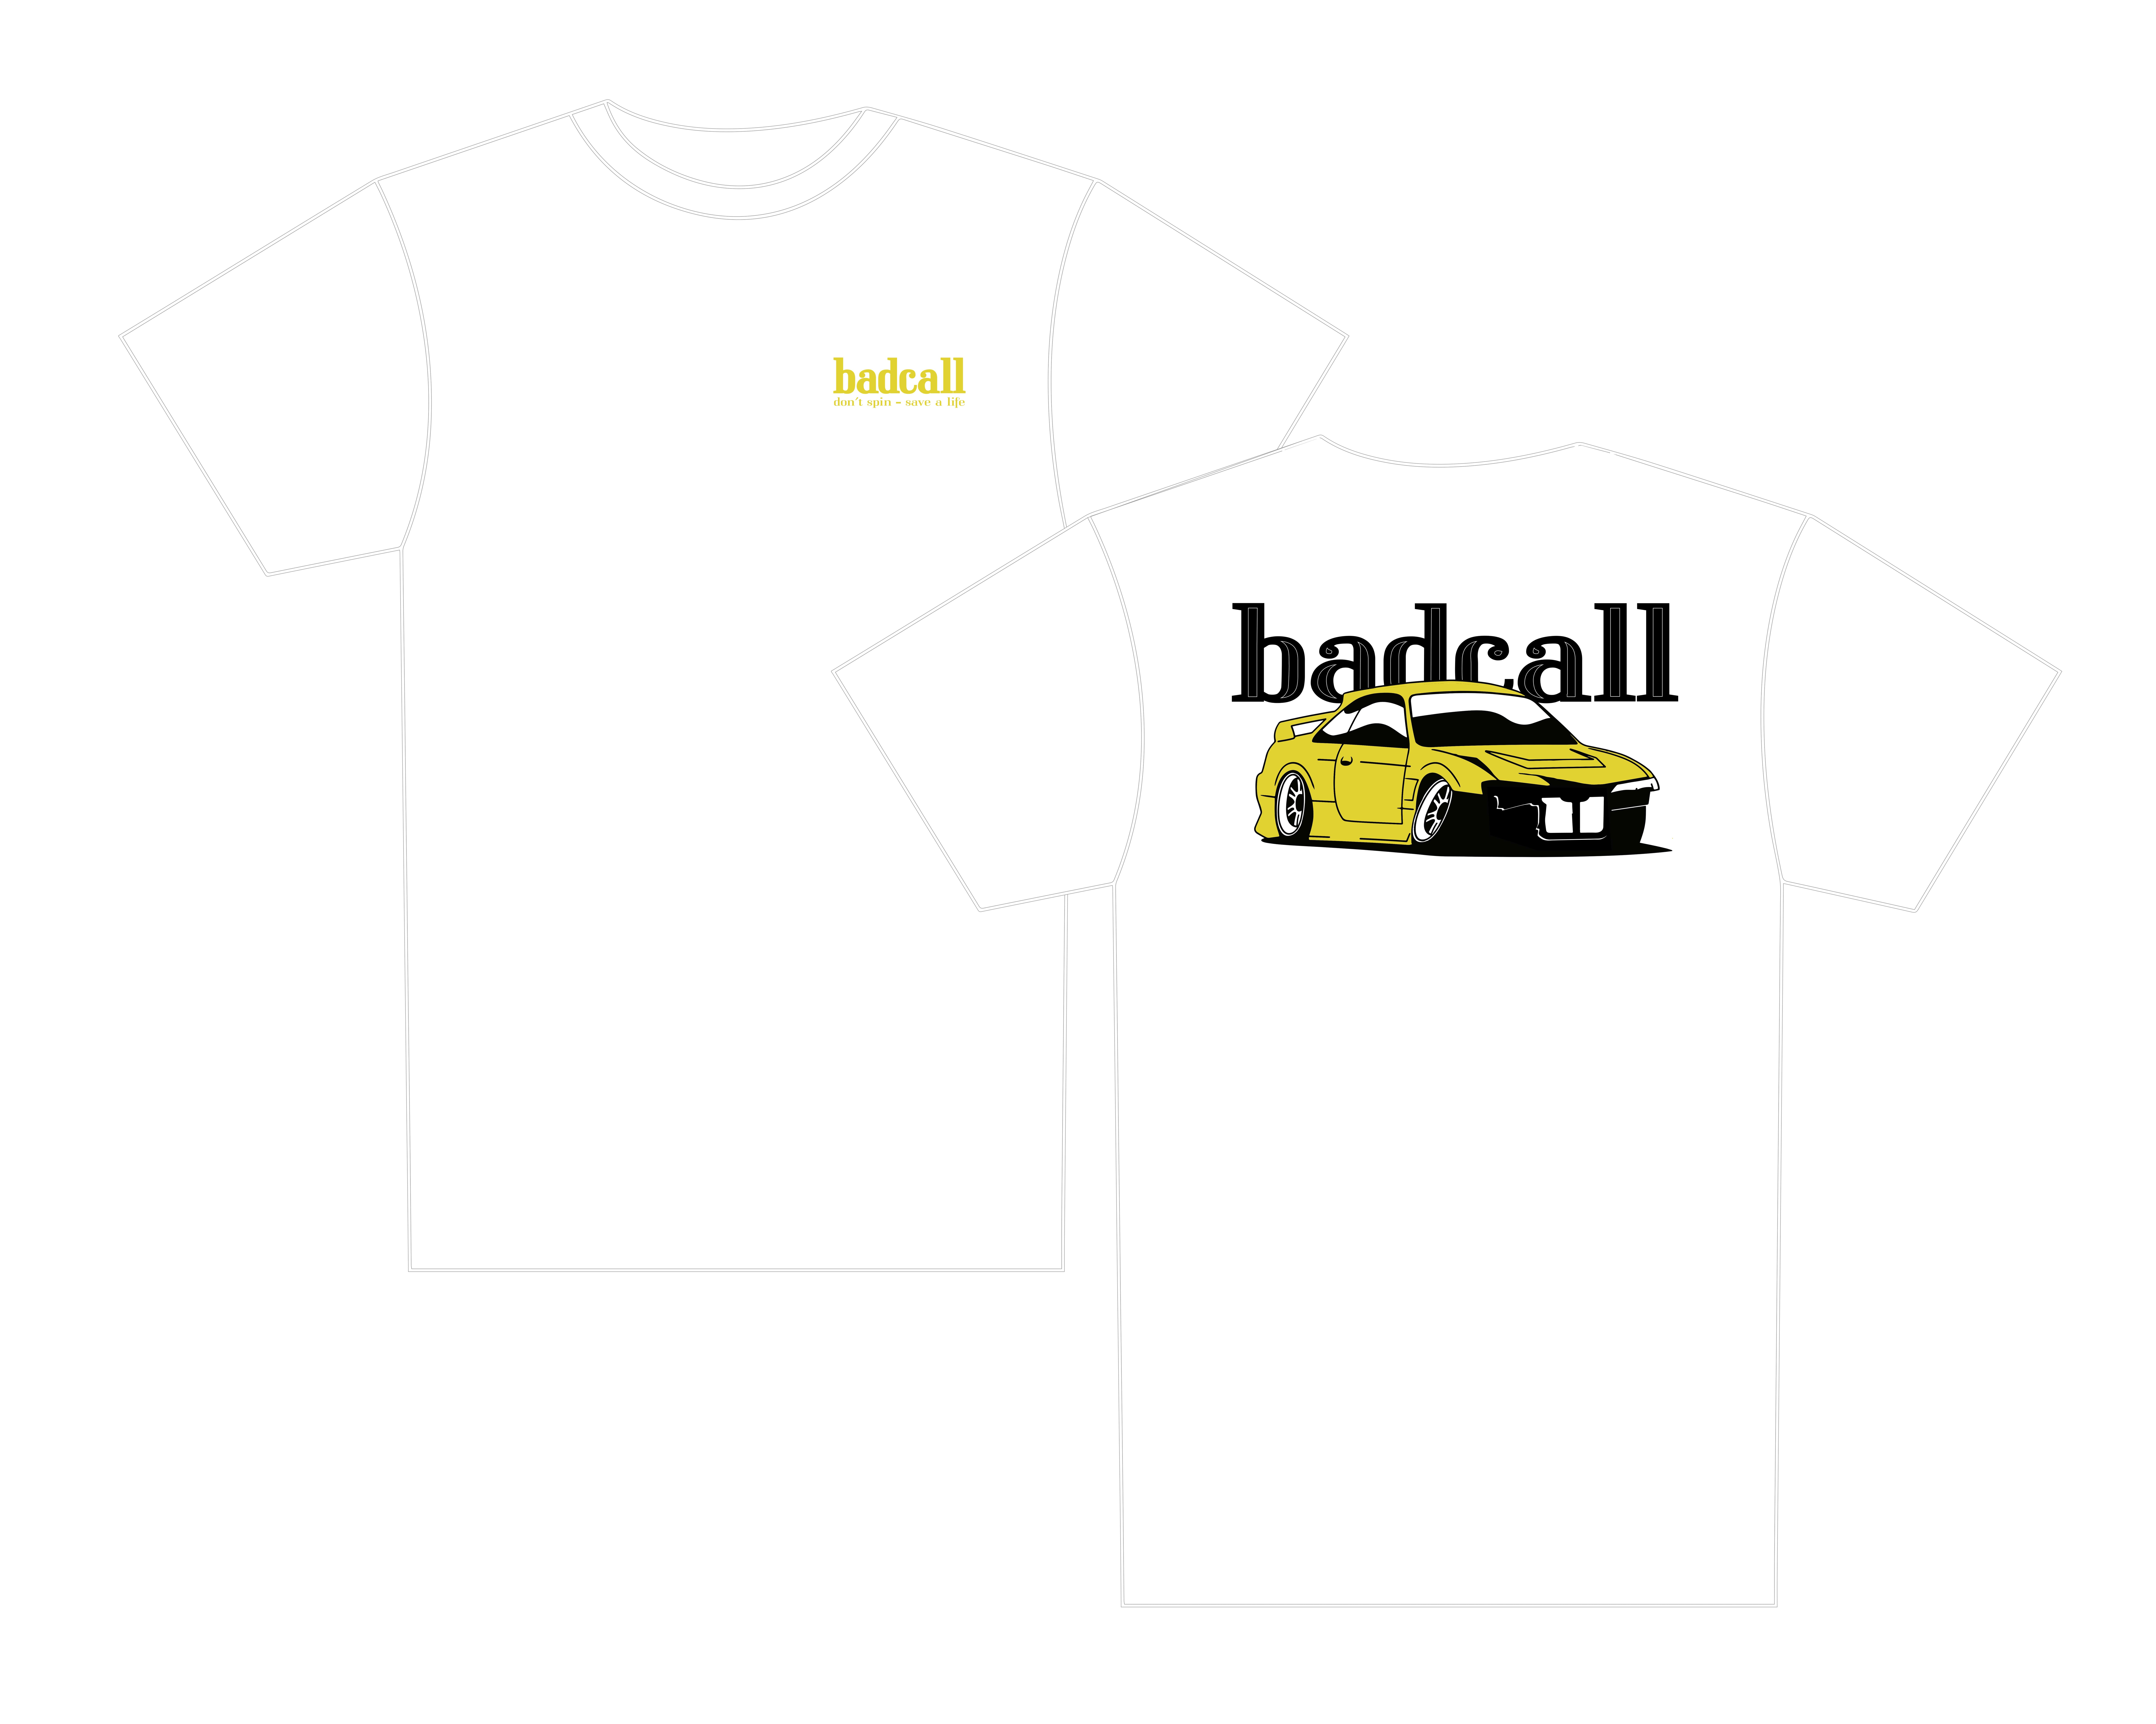 BADCALL X BWAGG88 - "Don't Spin" Crash Tee